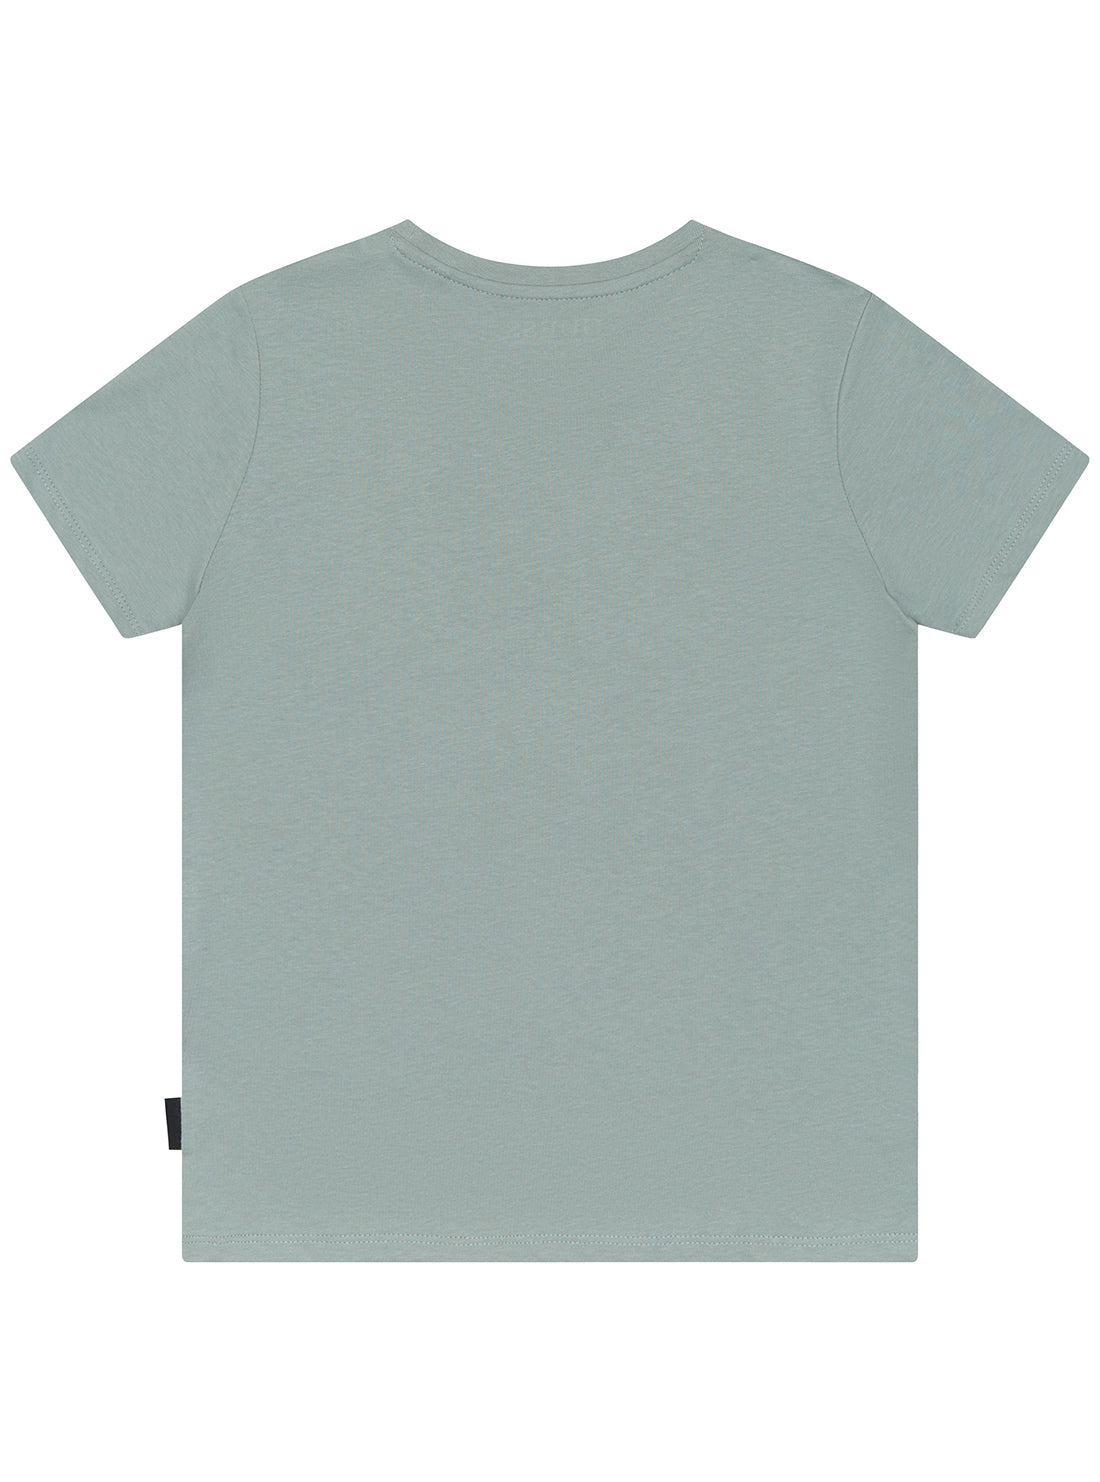 GUESS Green Grey Short Sleeves T-Shirt back view